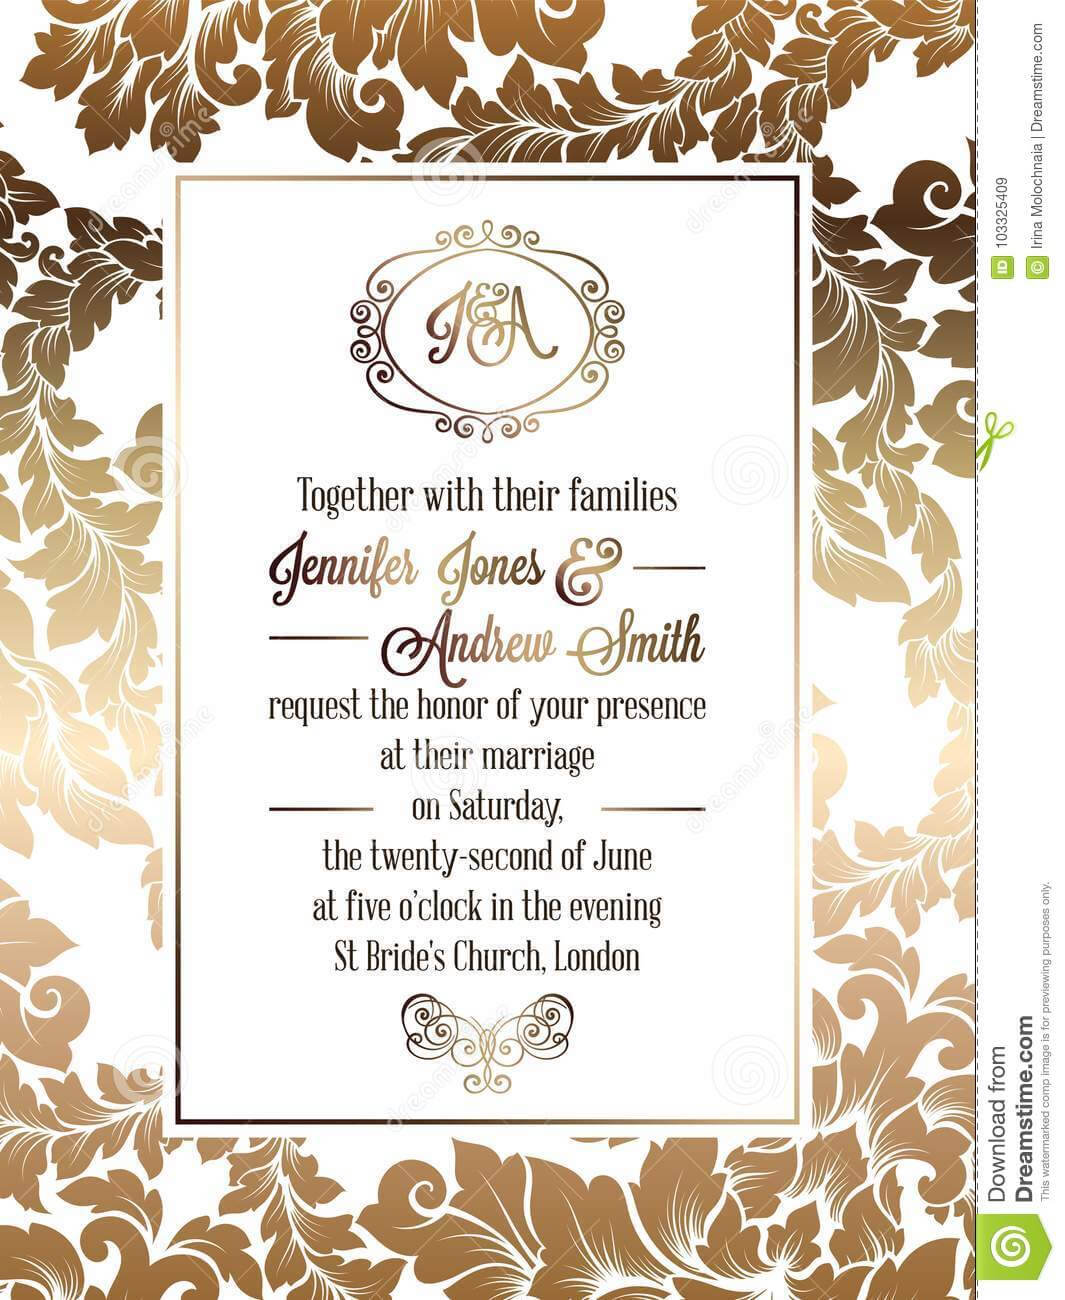 Vintage Baroque Style Wedding Invitation Card Template Regarding Church Wedding Invitation Card Template